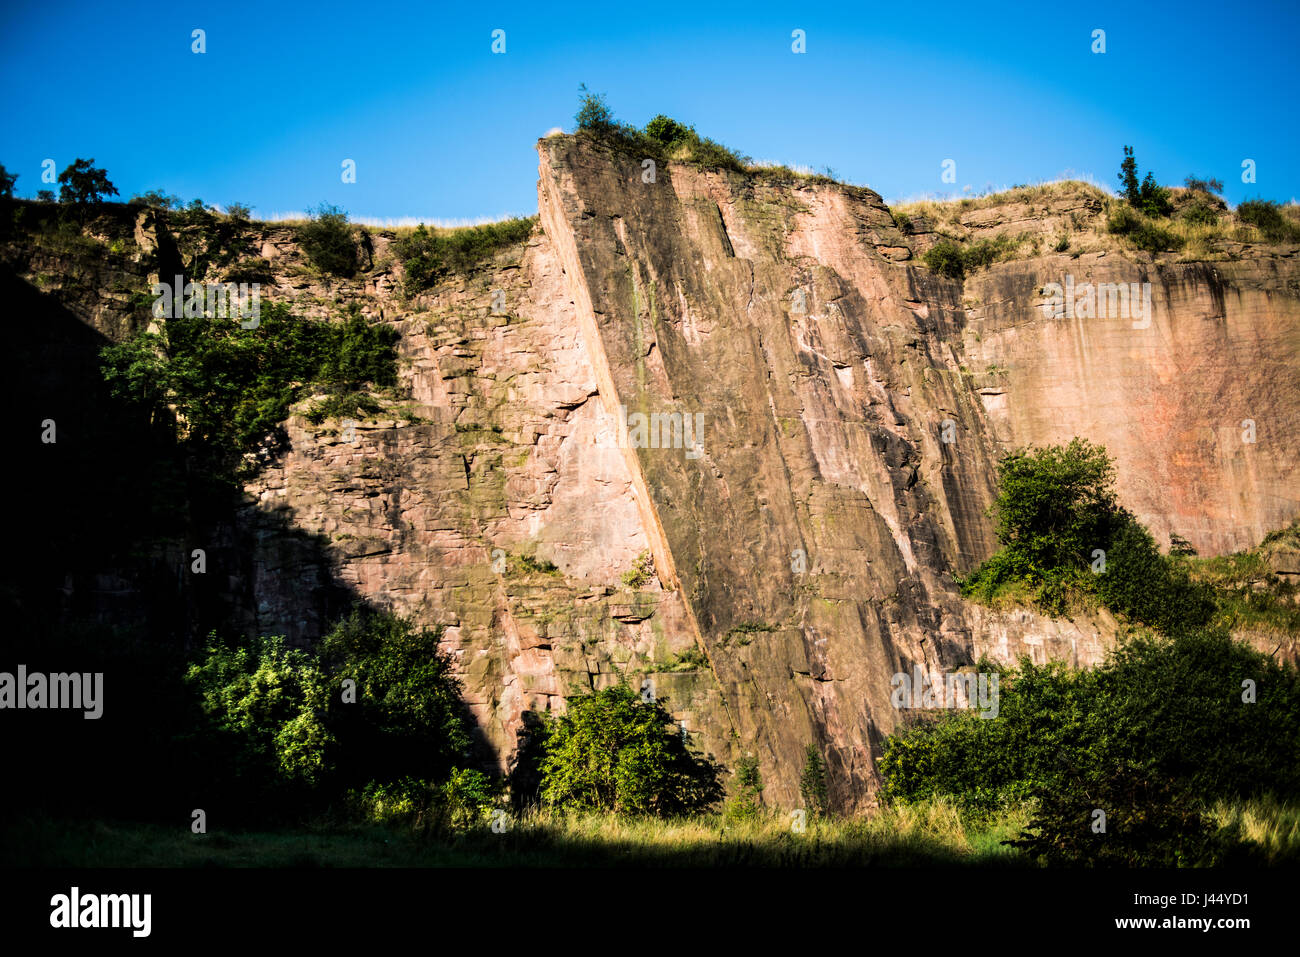 Big climbing wall in Germany, sunny day. Stock Photo